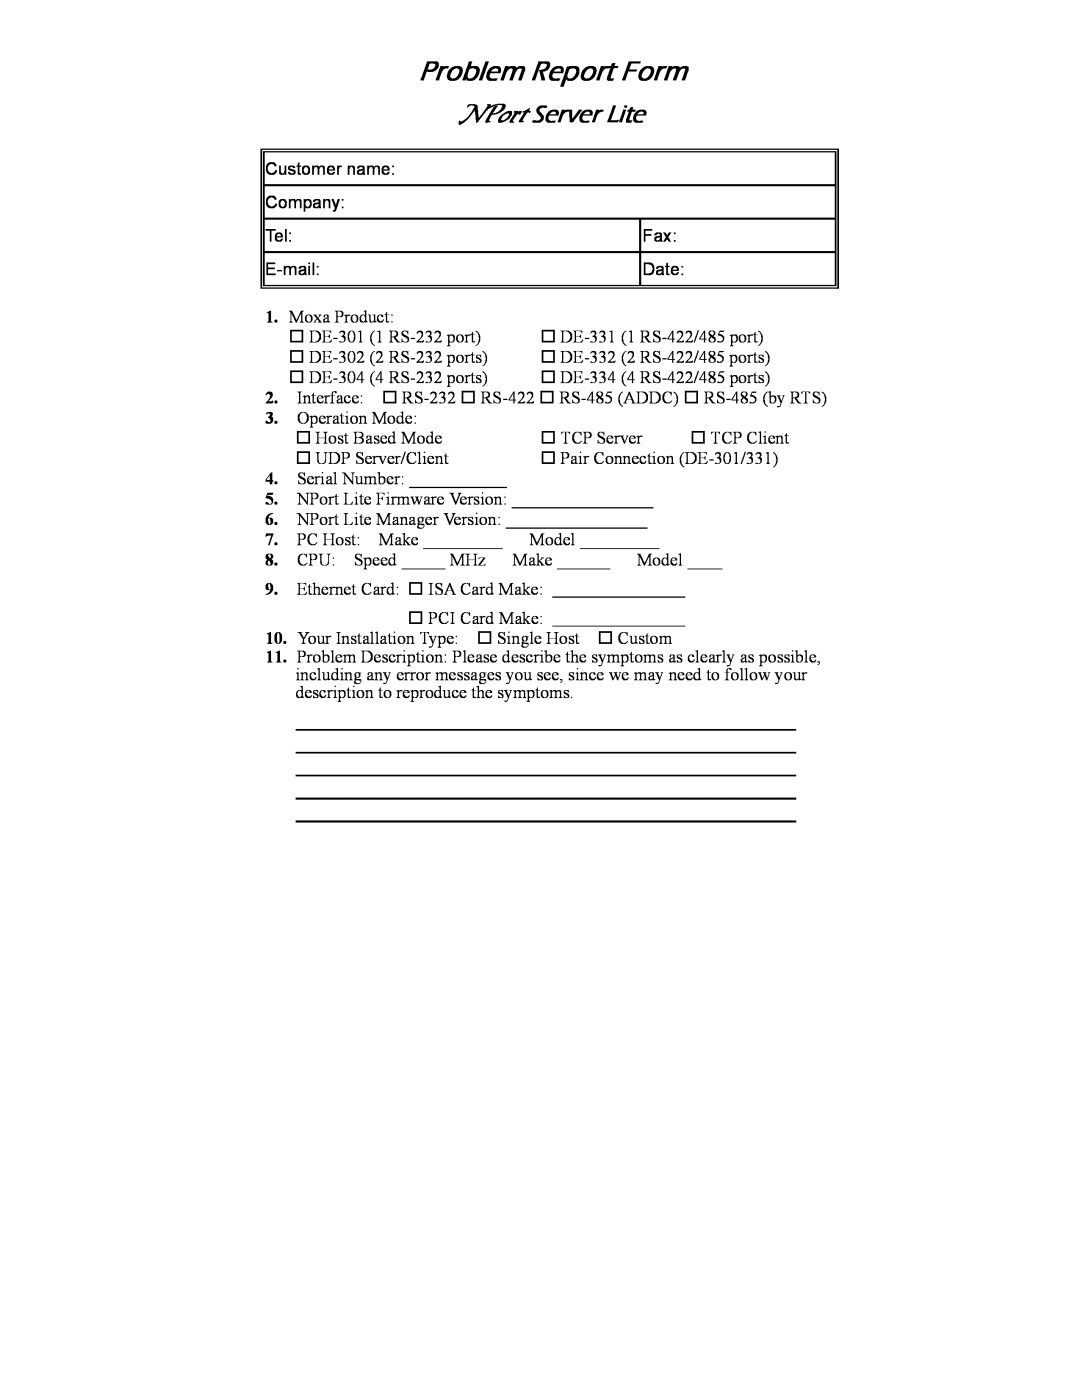 Hamilton Beach DE-301/331, DE-302/304/332/334 manual Problem Report Form, NPort Server Lite 